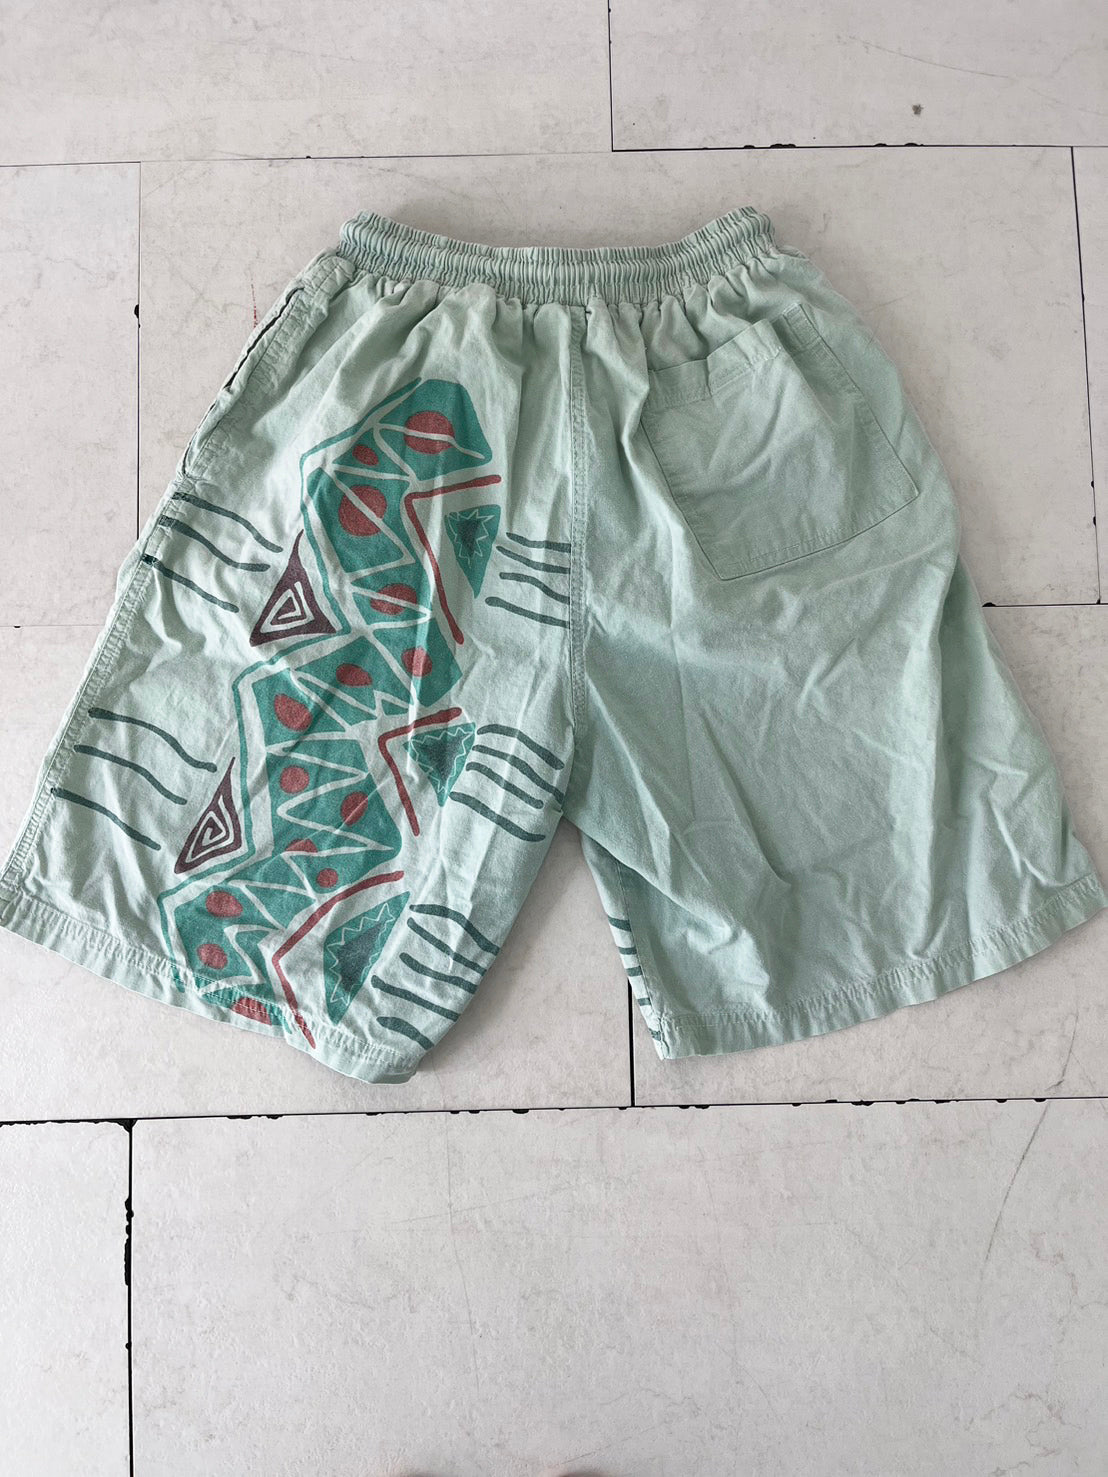 【EURO vintage】 POUATEAM beach shorts サーフパンツ ライトグリーン ビーチショーツ (キッズXXL ※women's M相当）